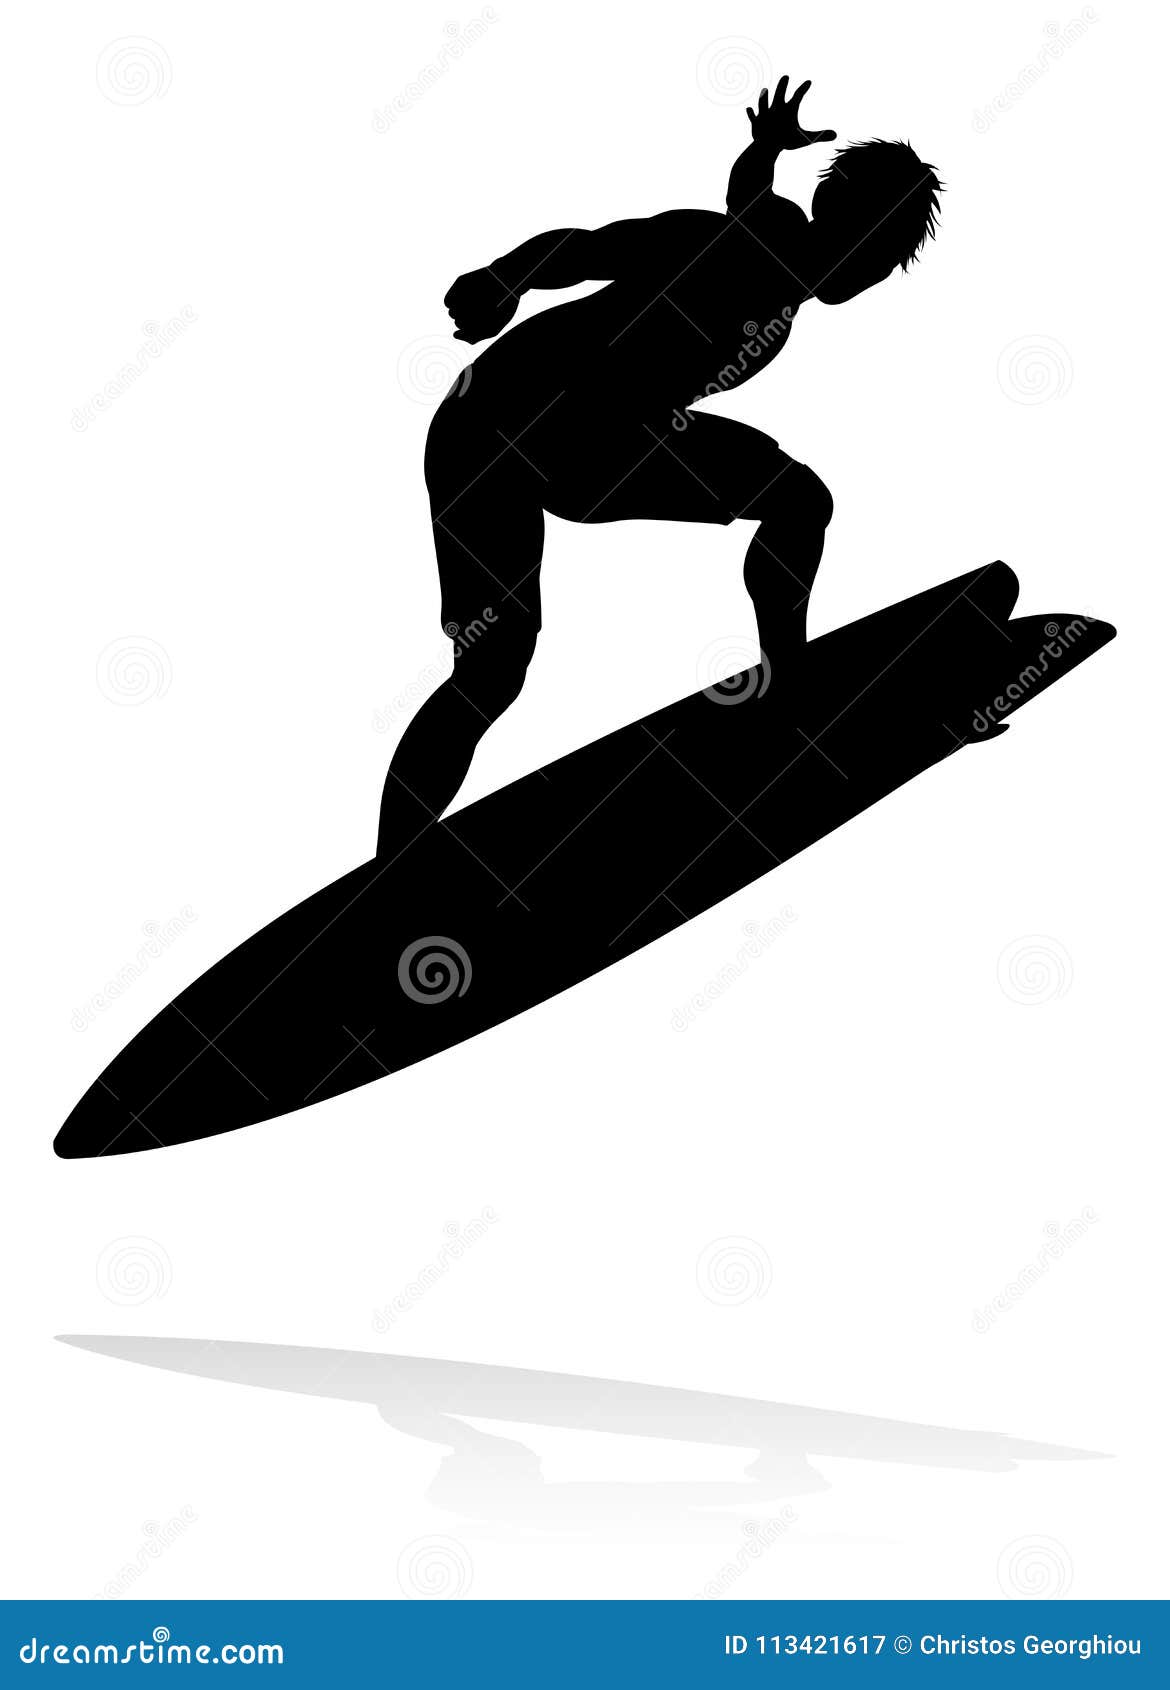 Surfer Silhouette stock vector. Illustration of silhouet - 113421617